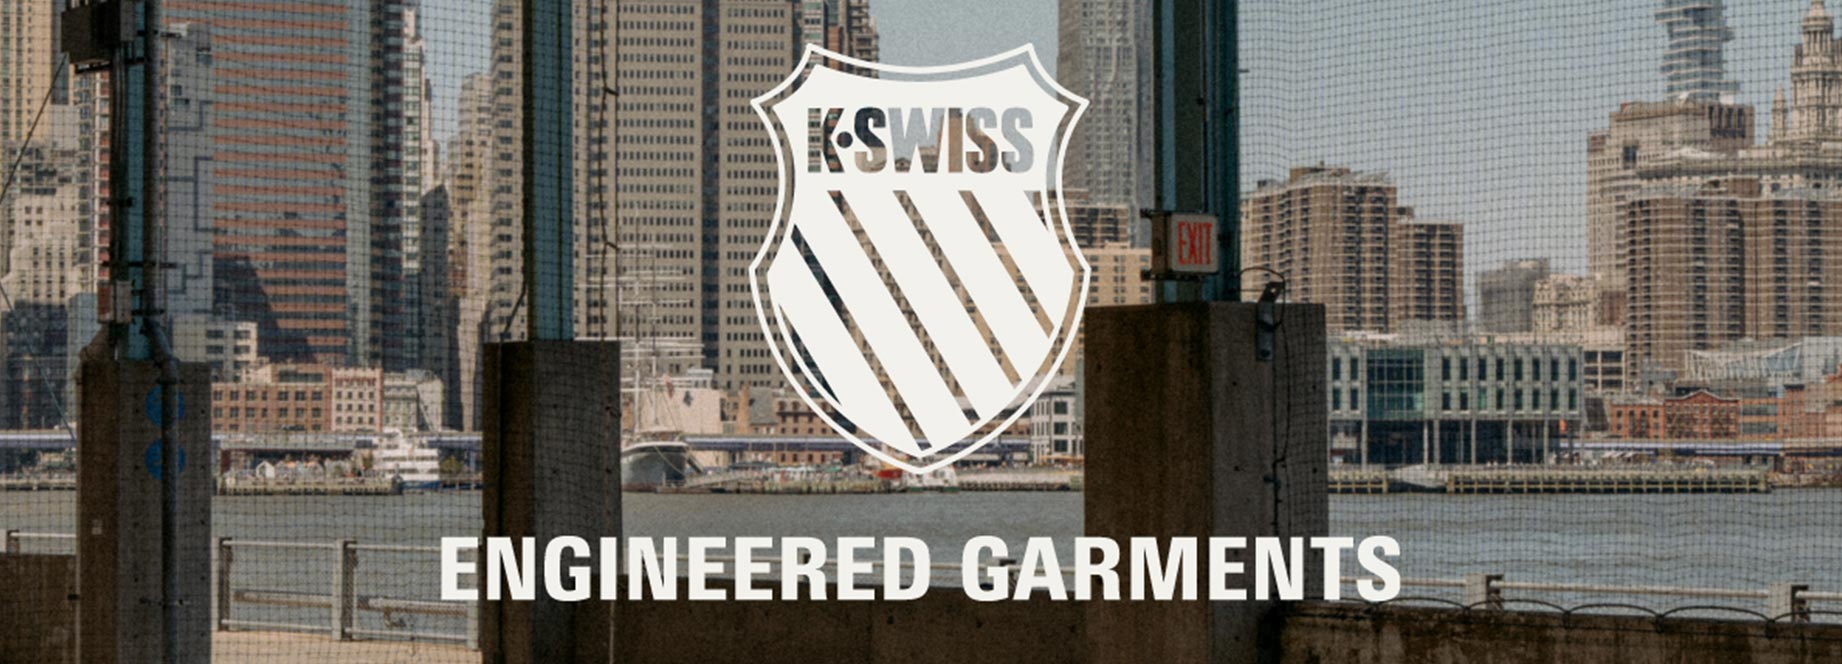 Engineered Garments x K Swiss